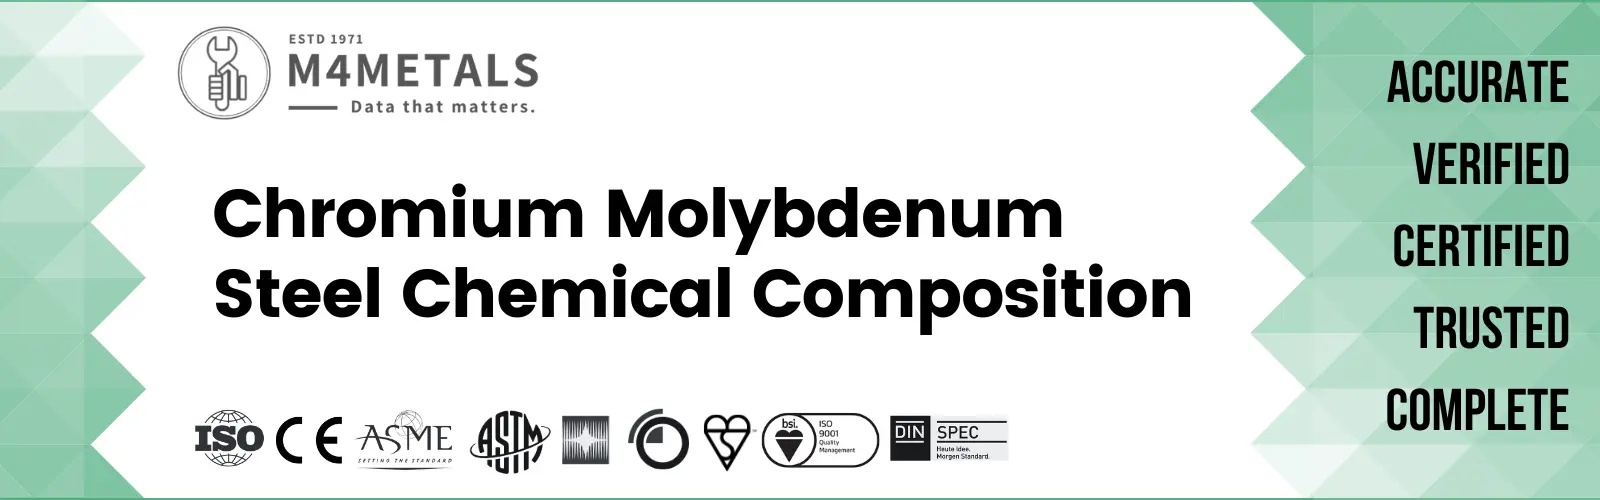 Chromium Molybdenum Steel Chemical Composition